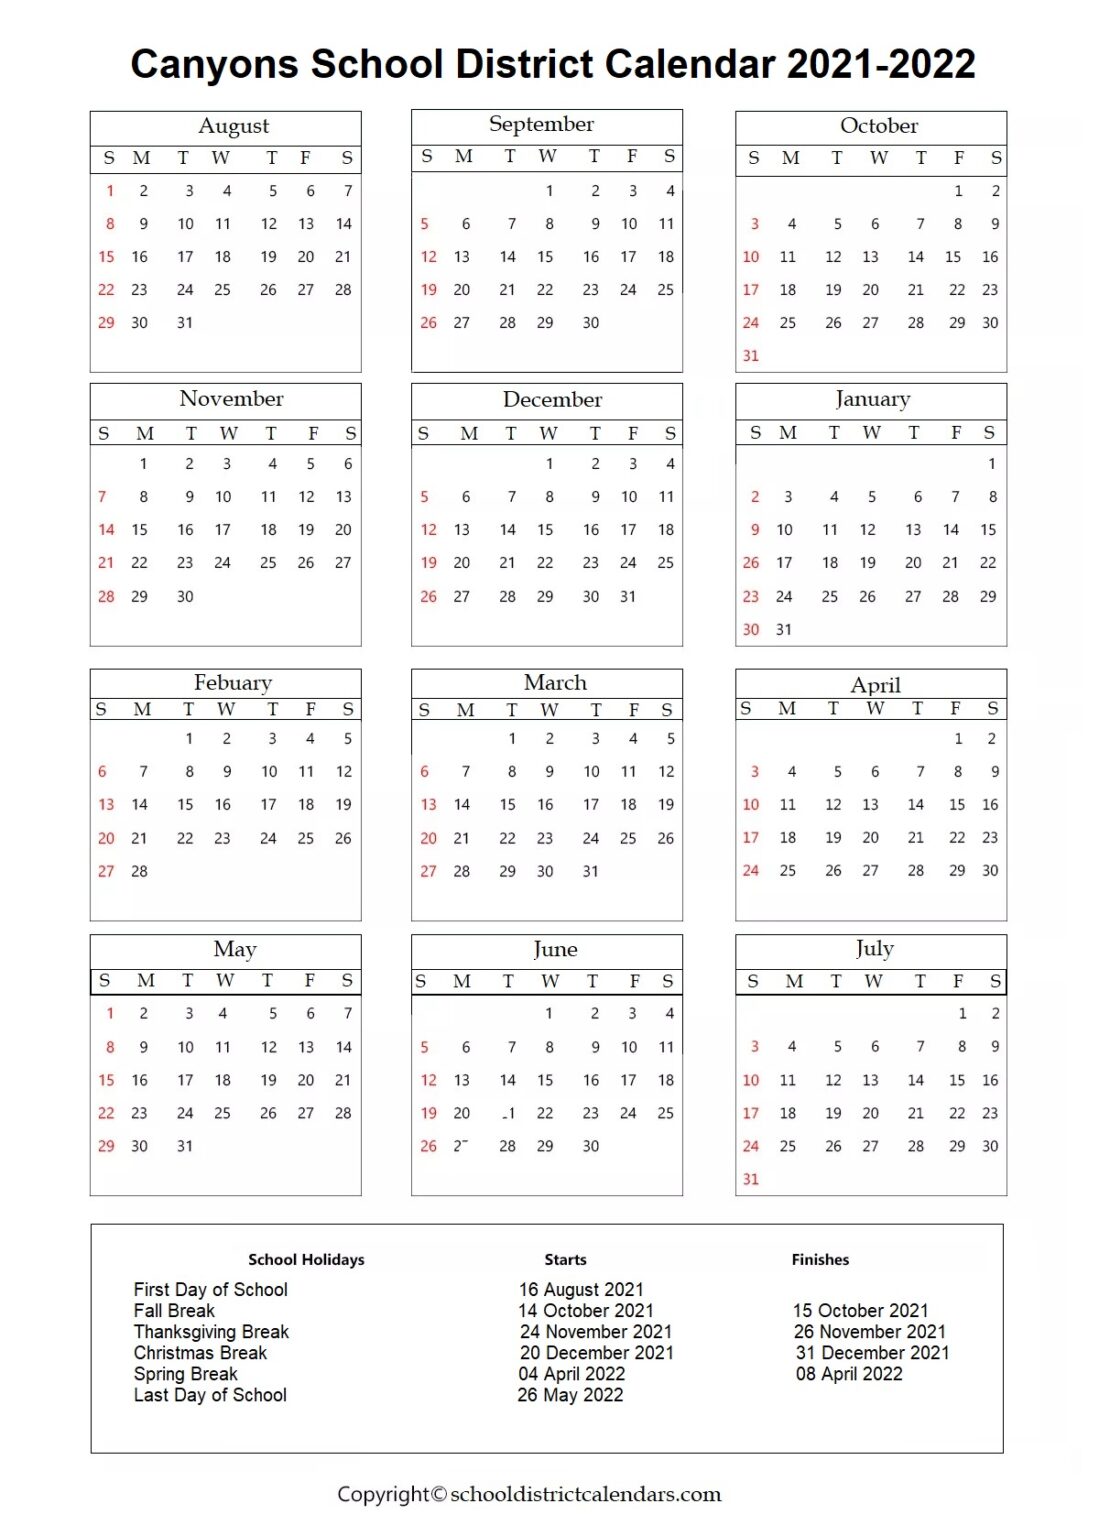 Canyons School District, Utah Calendar Holidays 2021 School District